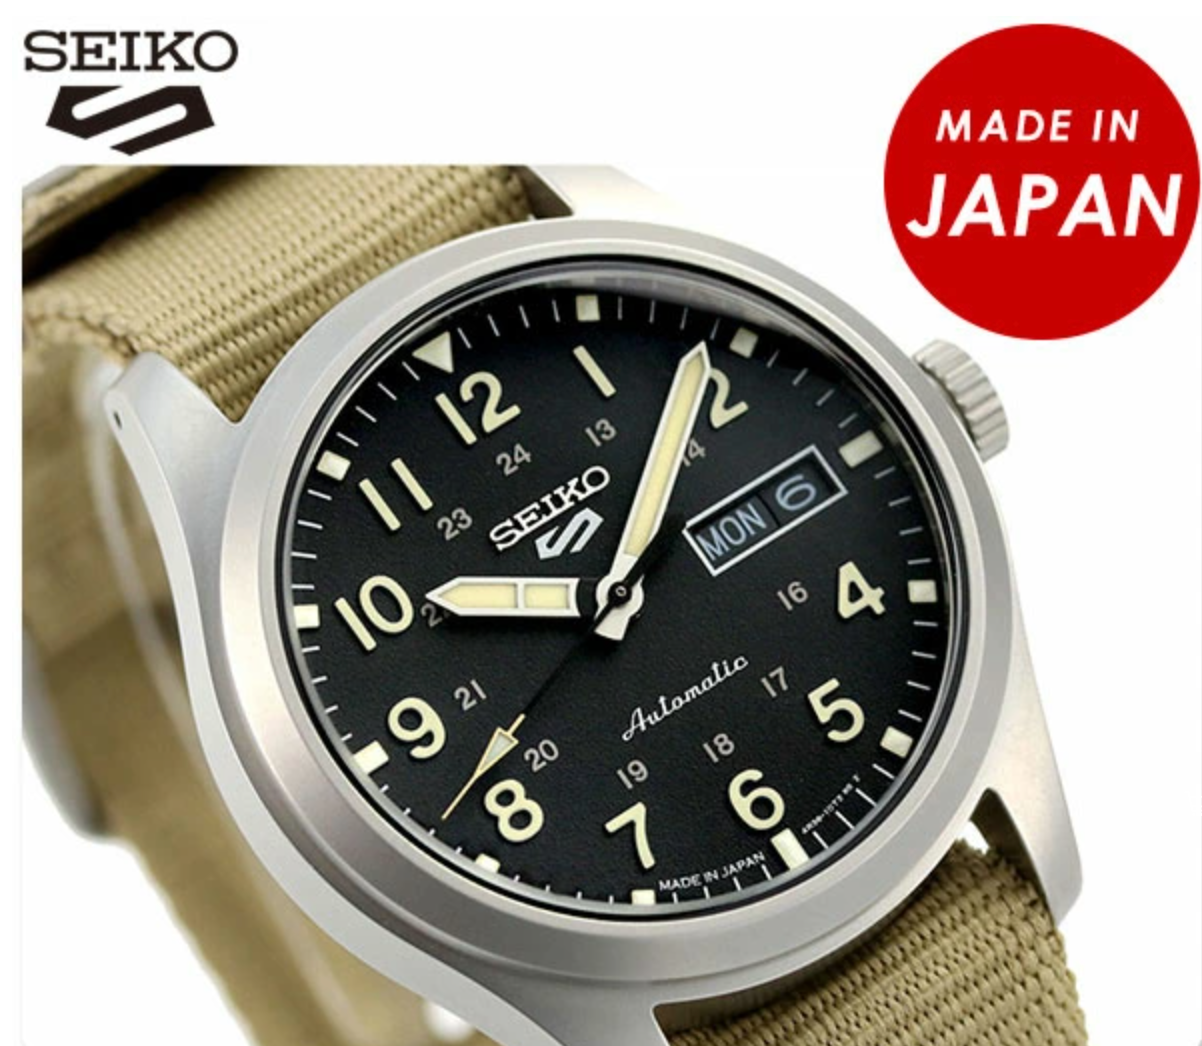 Seiko 5 Sports SBSA117 MADE IN JAPAN JDM 39,4mm 100M WR ENGLISH-KANJI Japan Domestic market automatic sport men’s watch nylon band